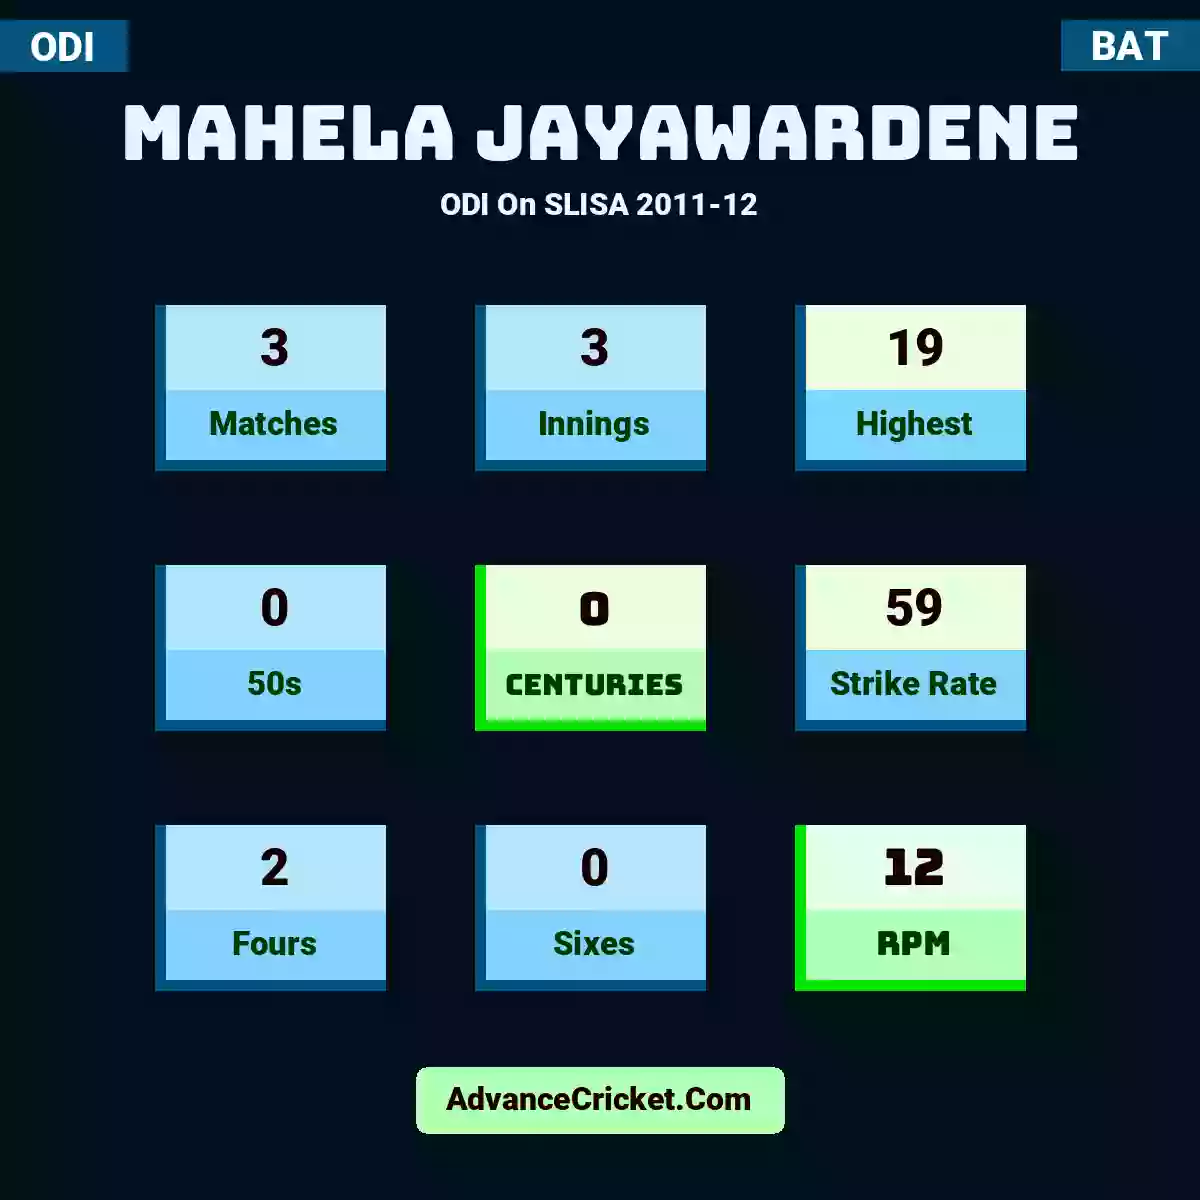 Mahela Jayawardene ODI  On SLISA 2011-12, Mahela Jayawardene played 3 matches, scored 19 runs as highest, 0 half-centuries, and 0 centuries, with a strike rate of 59. M.Jayawardene hit 2 fours and 0 sixes, with an RPM of 12.